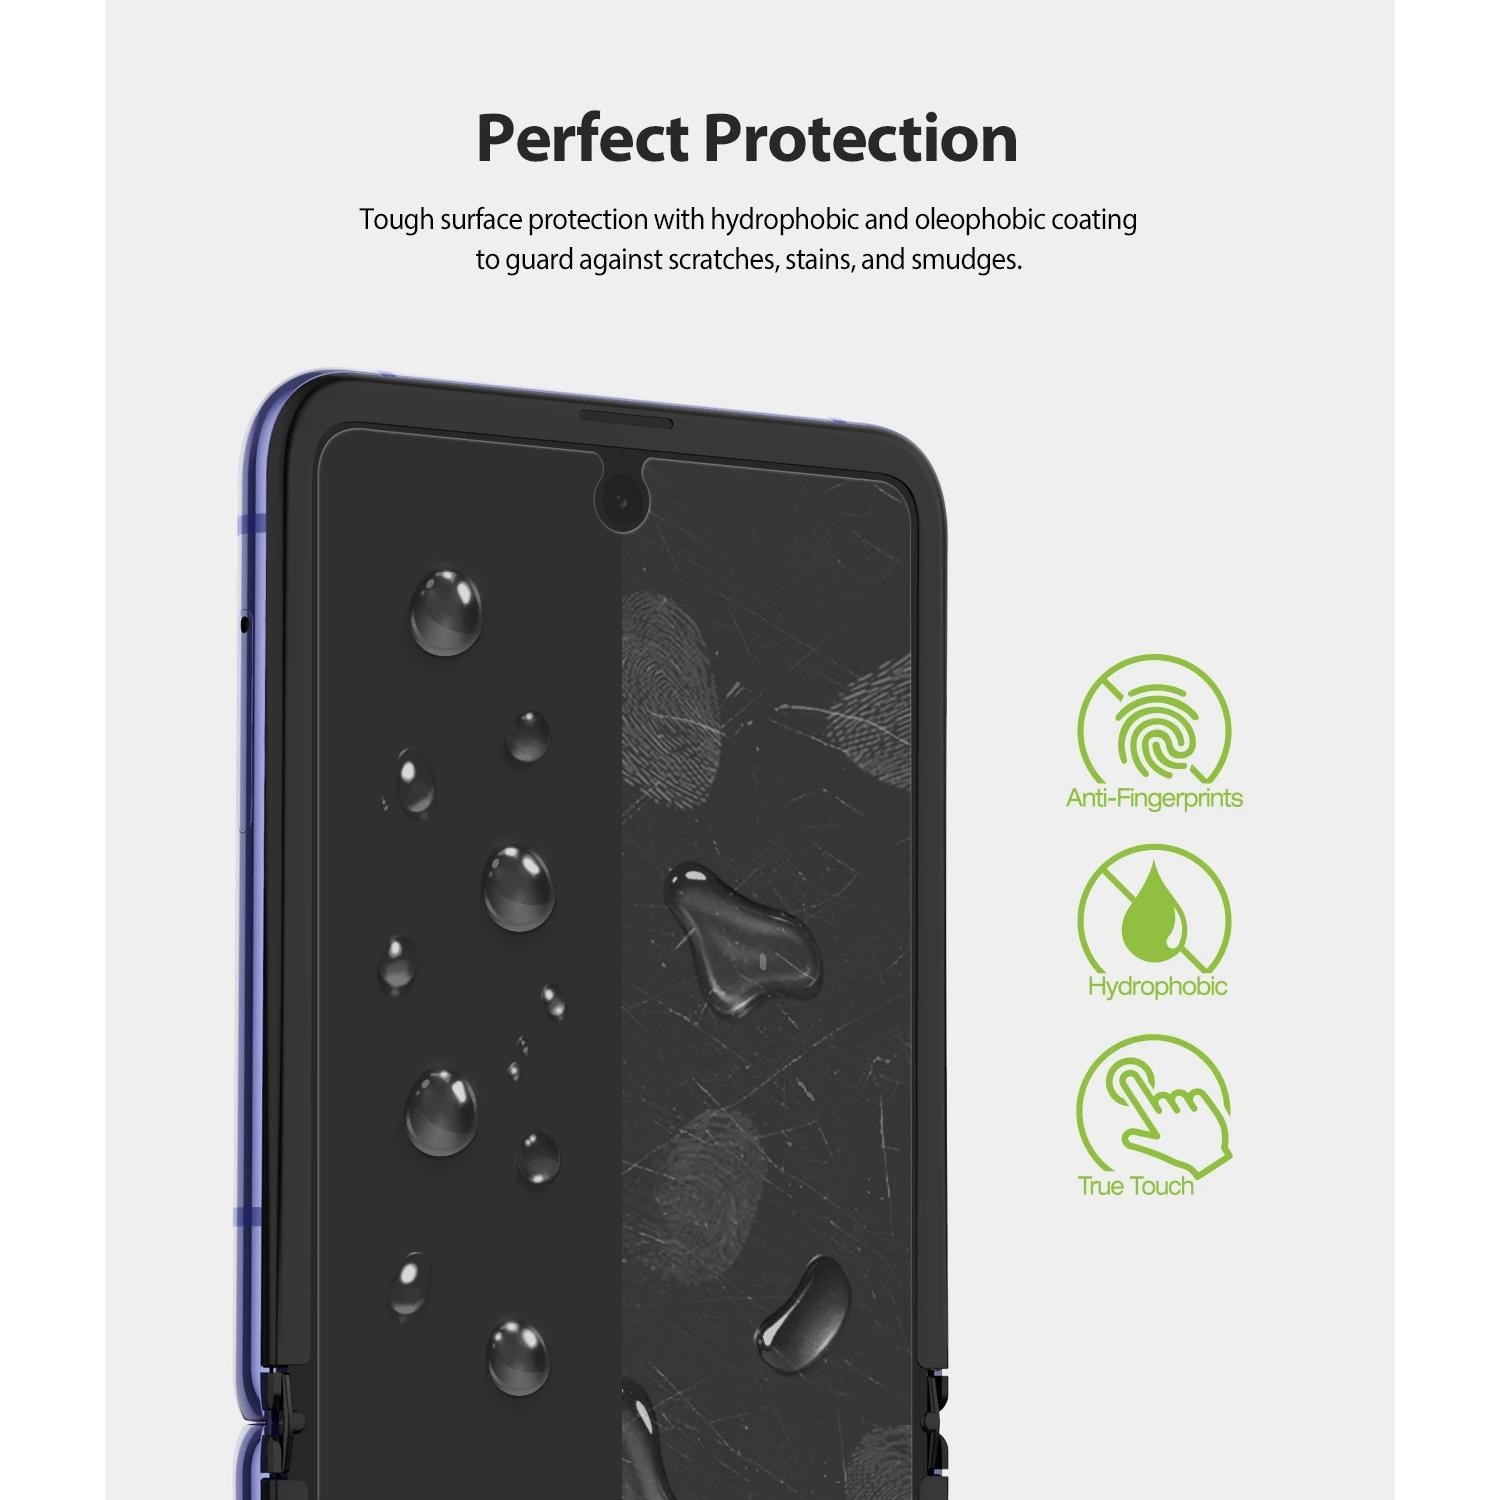 ID Screen Protector Galaxy Z Flip (2-pack)